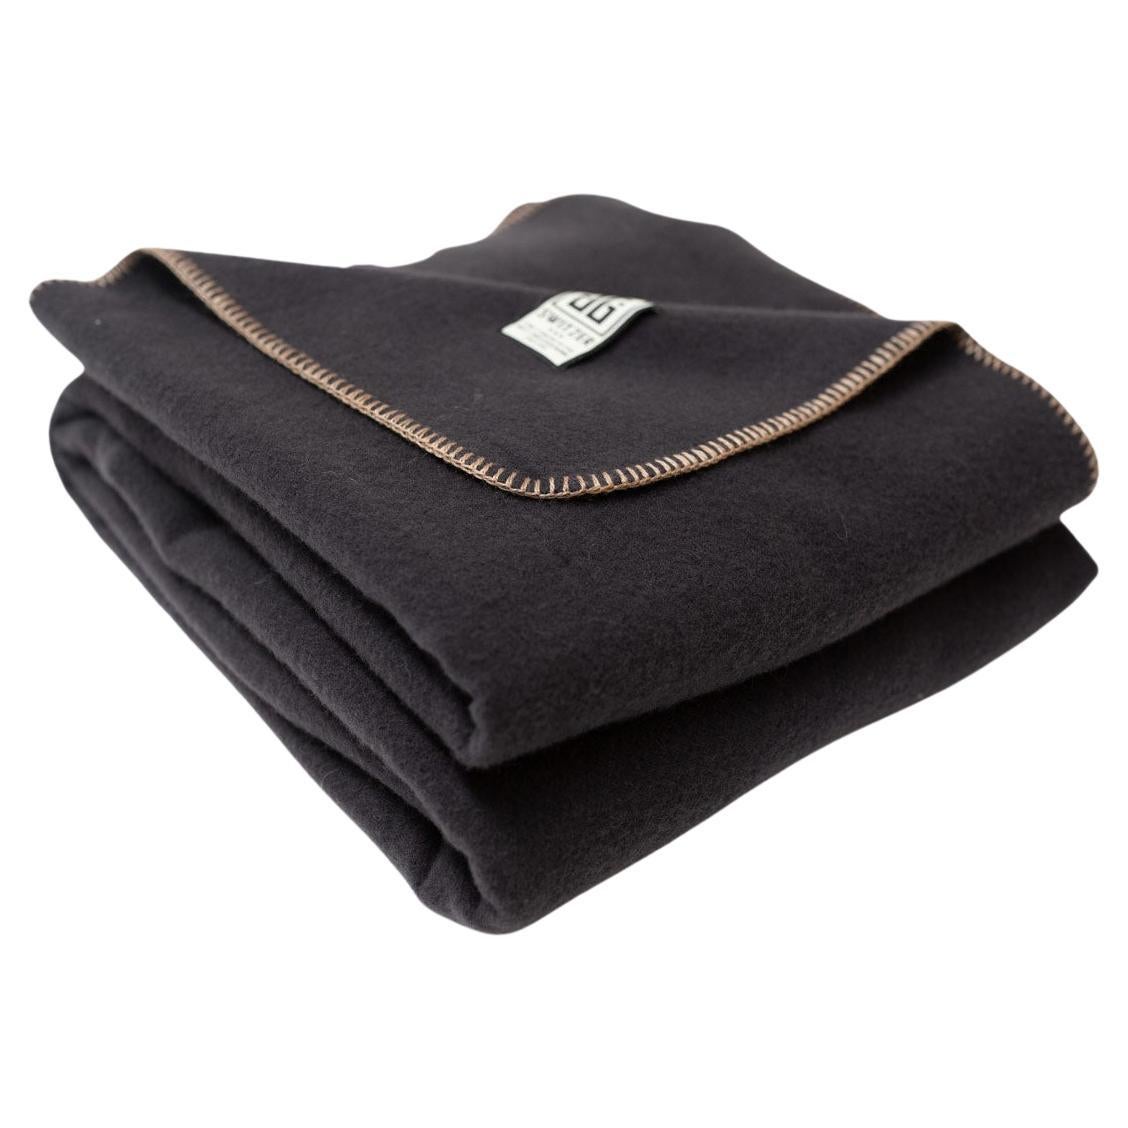 JG Classic Blanket 100% Merino Wool in Bark - King For Sale